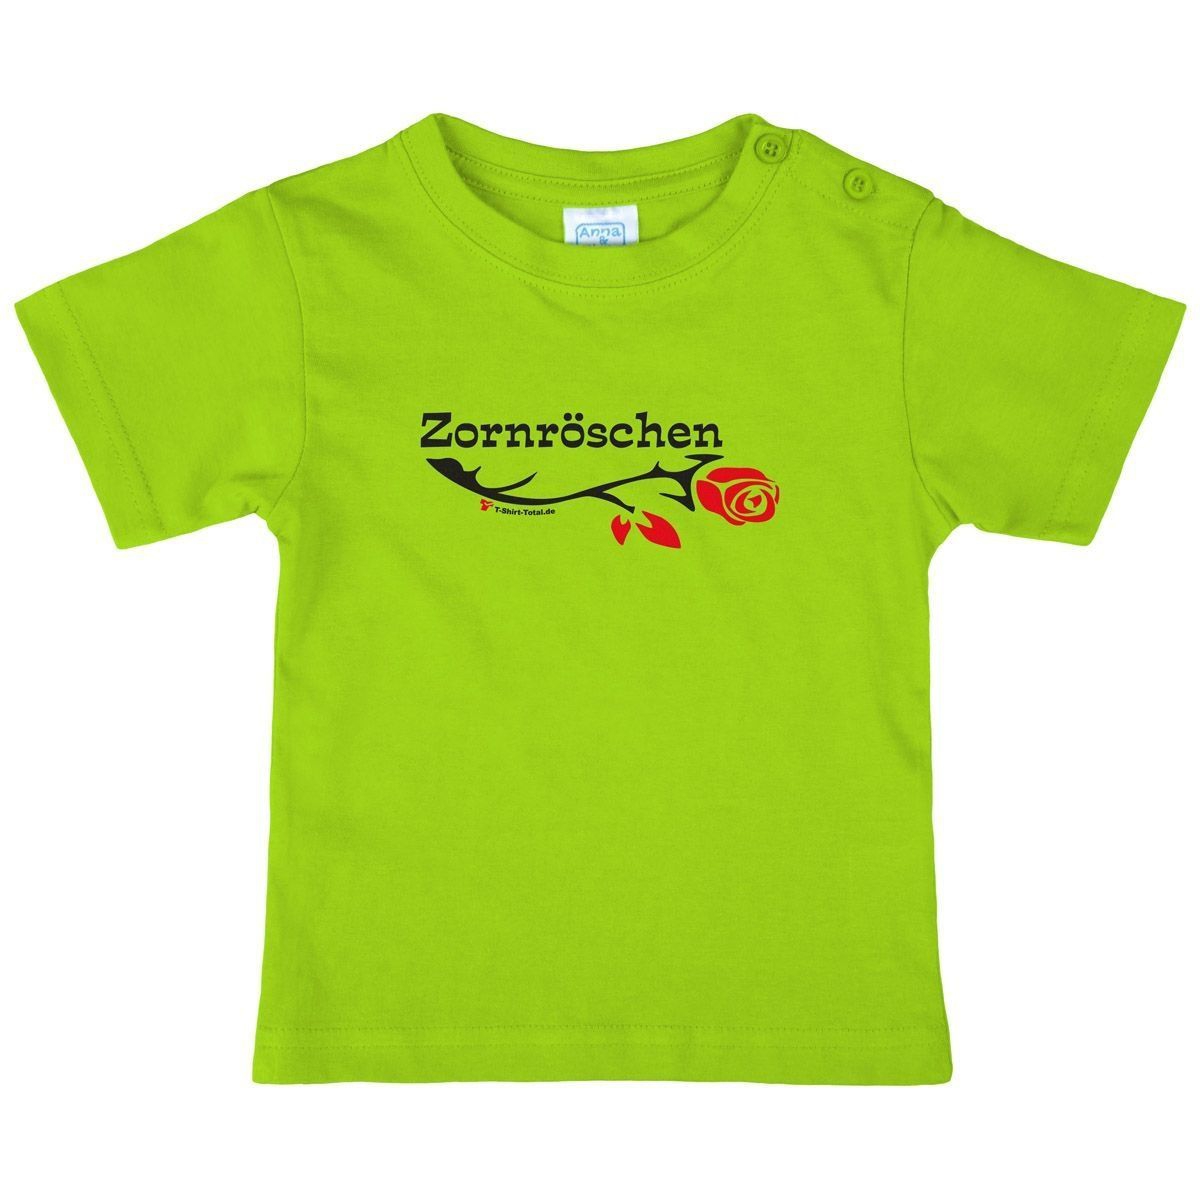 Zornröschen Kinder T-Shirt hellgrün 80 / 86